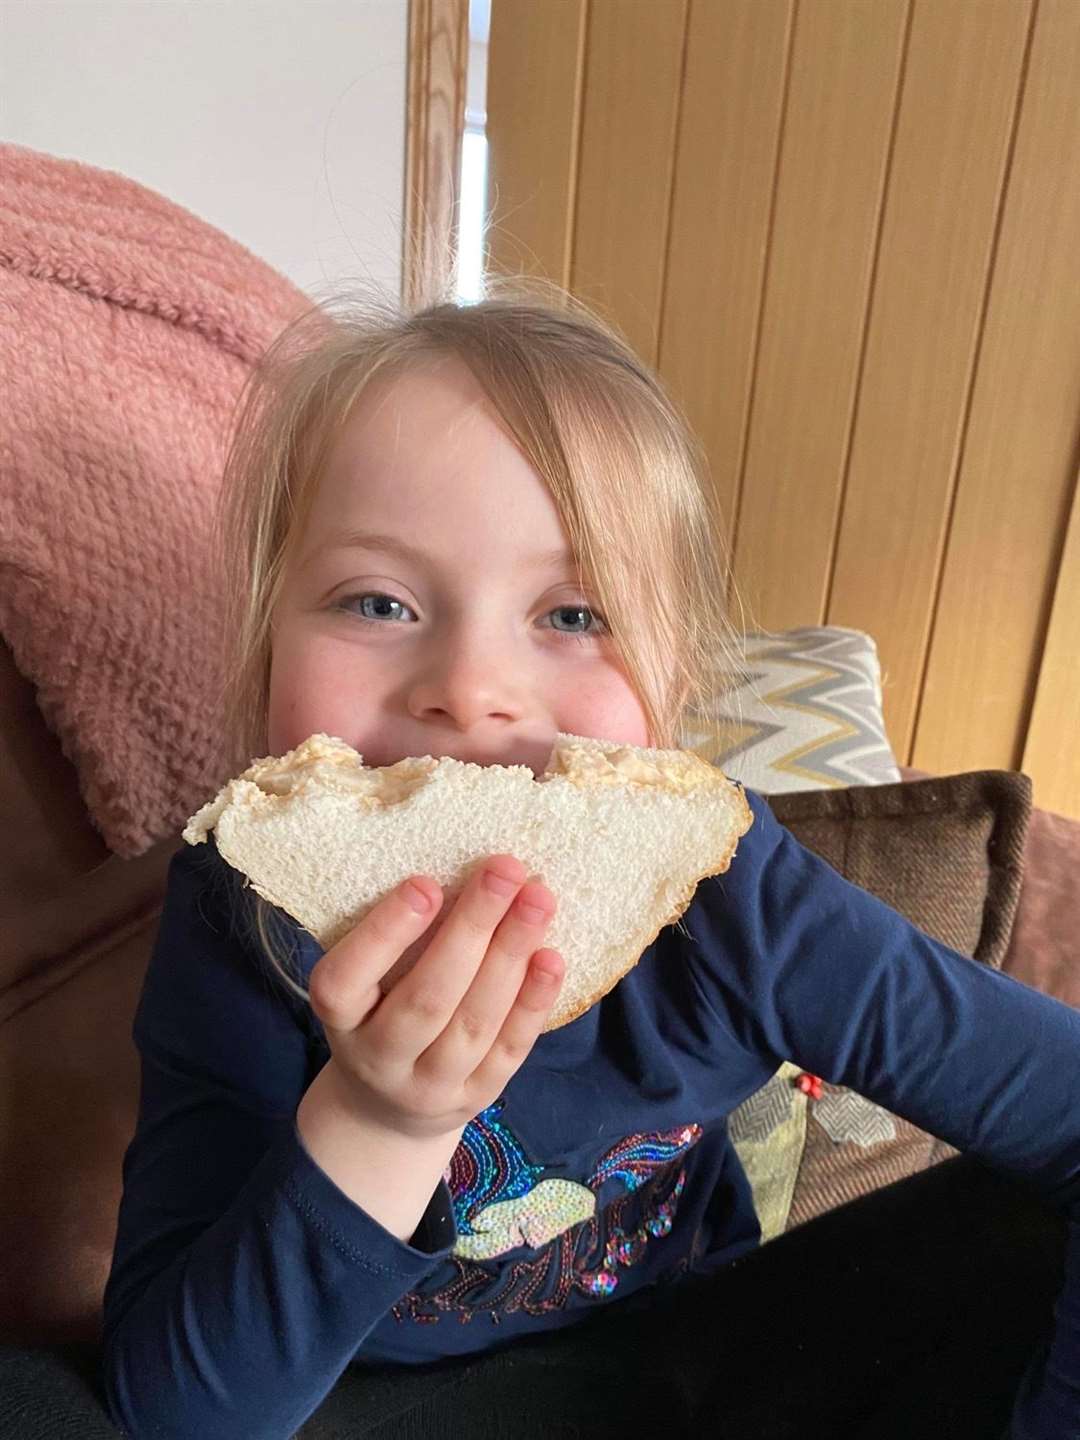 Dan's grand-daughter Carla having a sandwich – before the scorries get it!